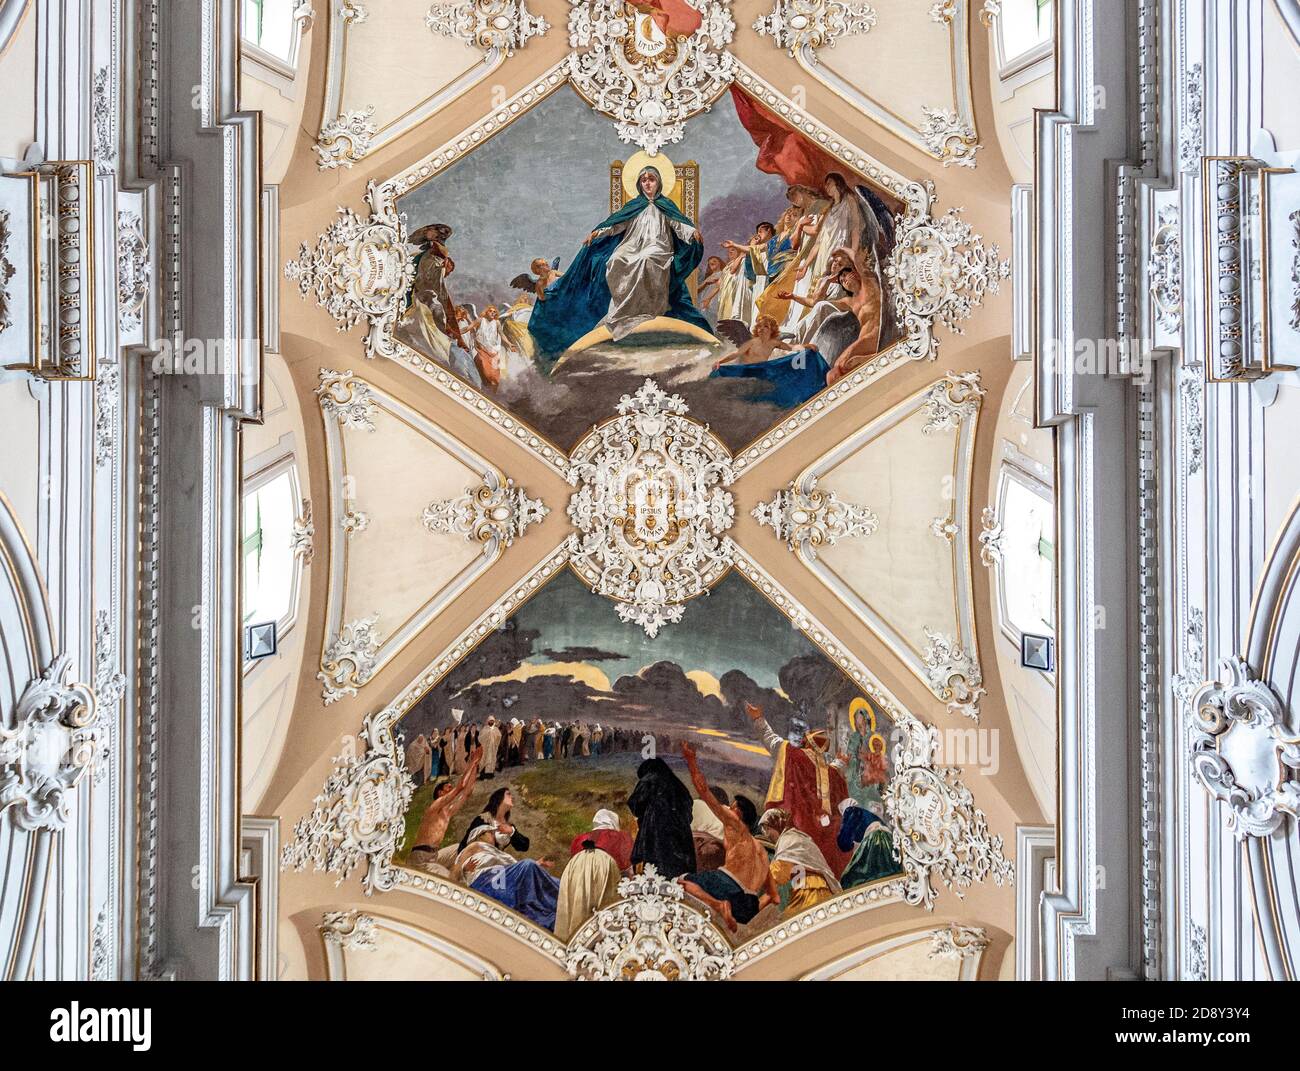 Ceiling of he Basilica della Collegiata in Catania, Sicily, Italy. It is considered an example of Sicilian Baroque architecture. Stock Photo